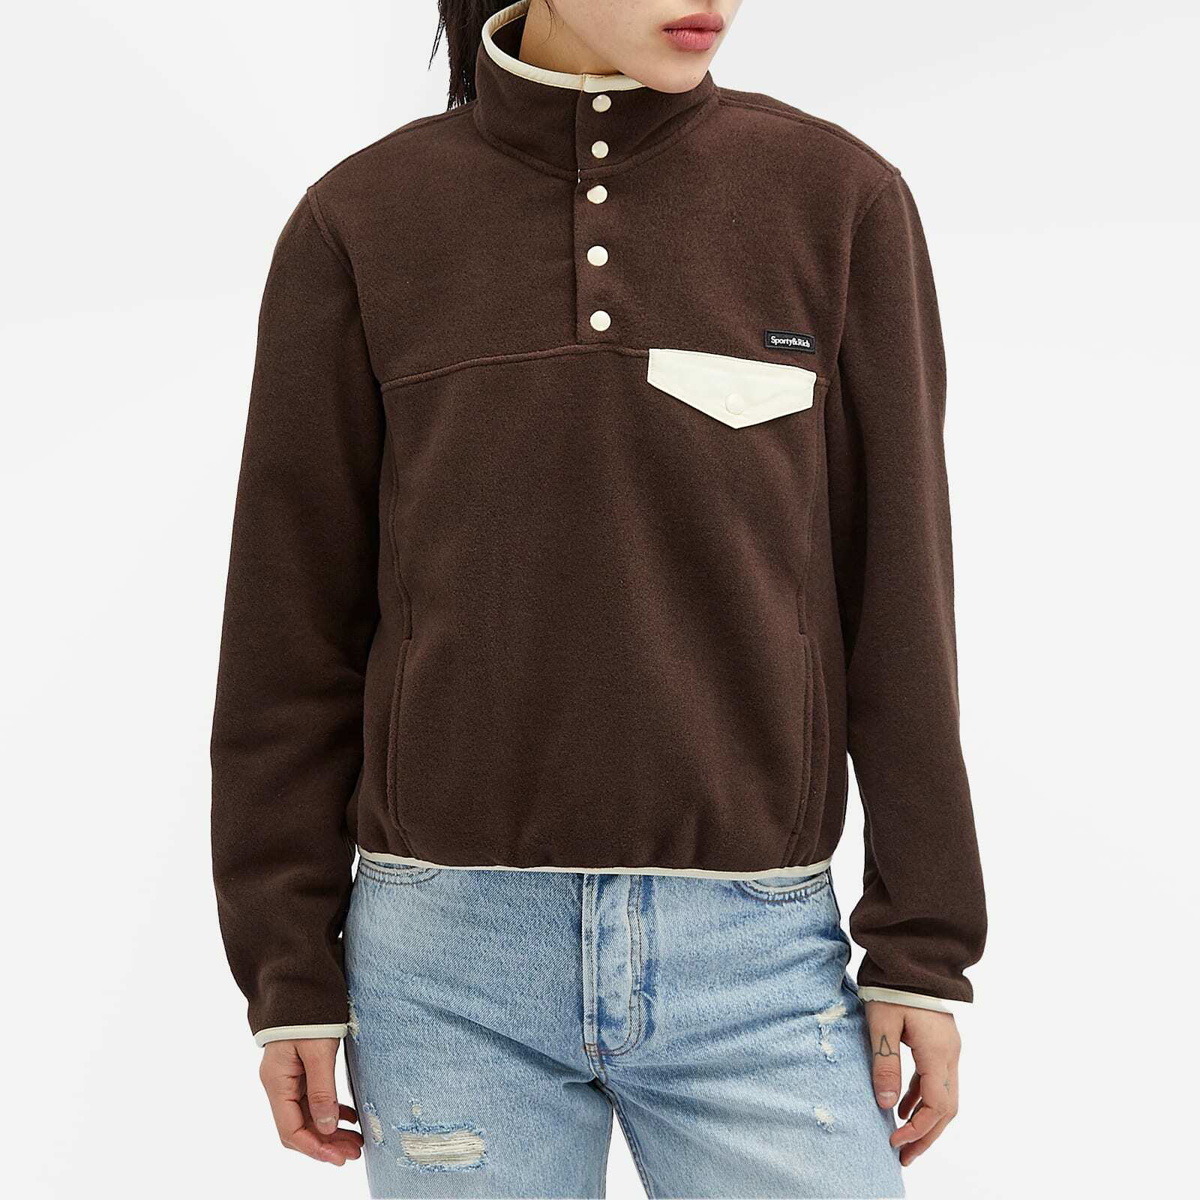 Sporty & Rich - Stand-up collar fleece sweatshirt